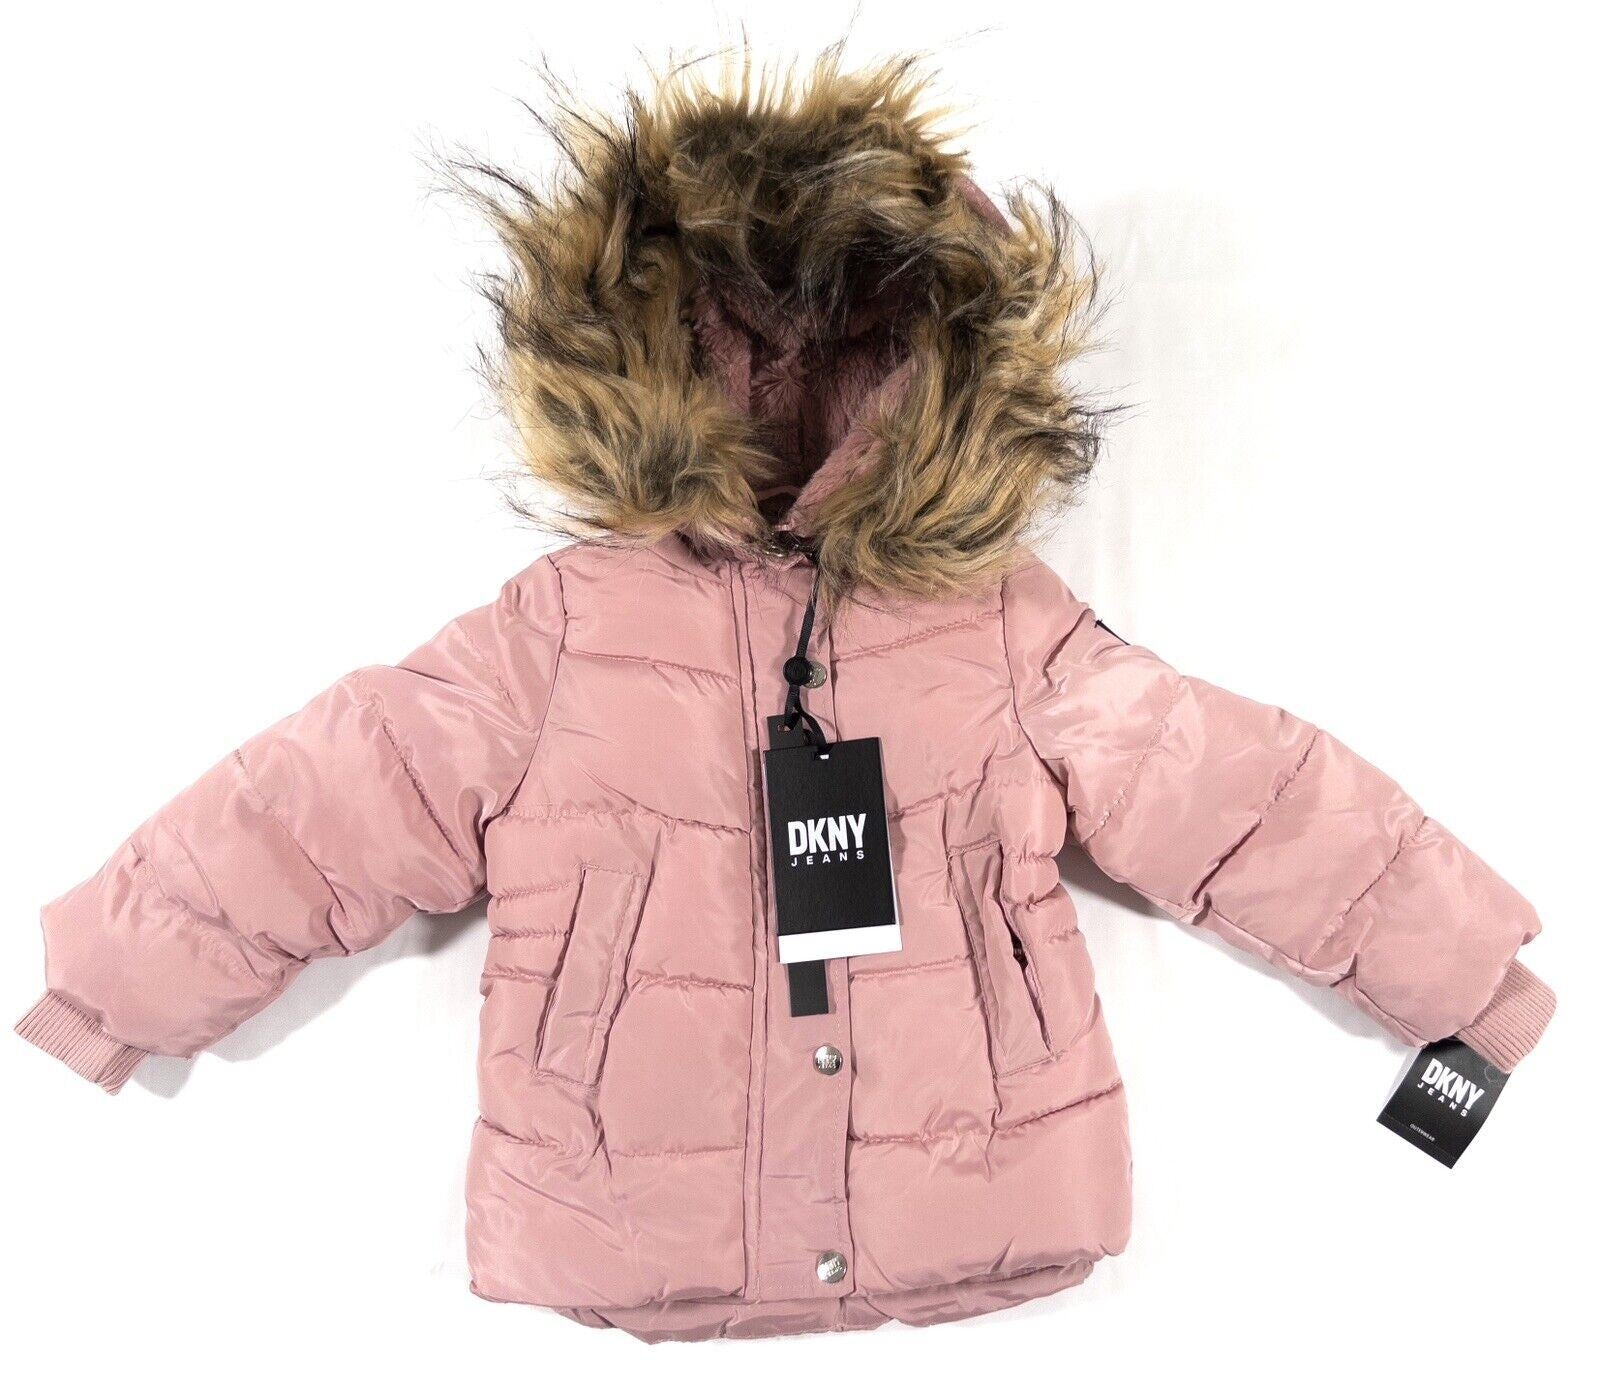 DKNY JEANS Infants Girls Pink Hooded Coat Size UK 12 Months